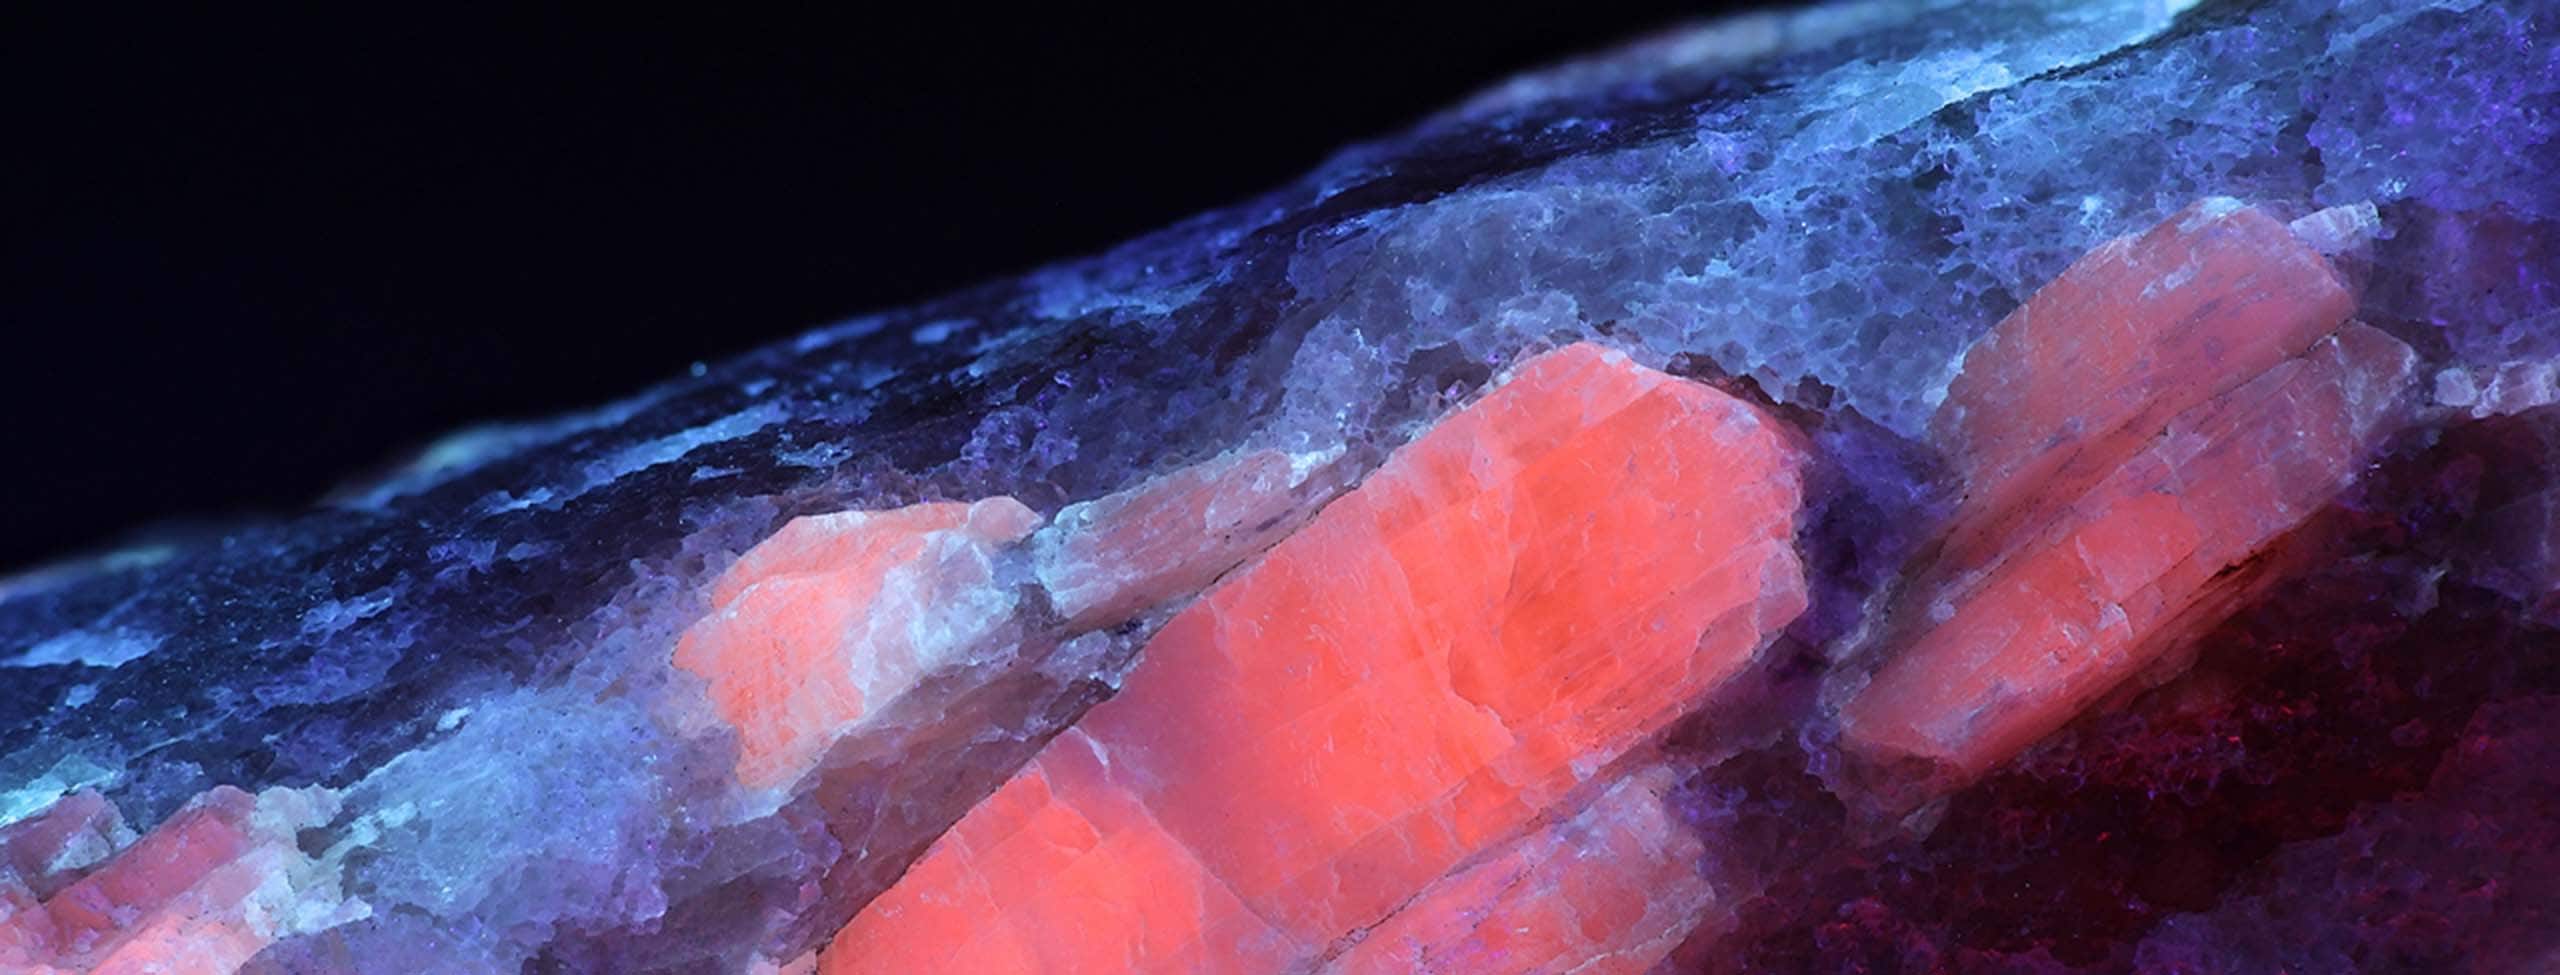 Lithium ore crystals